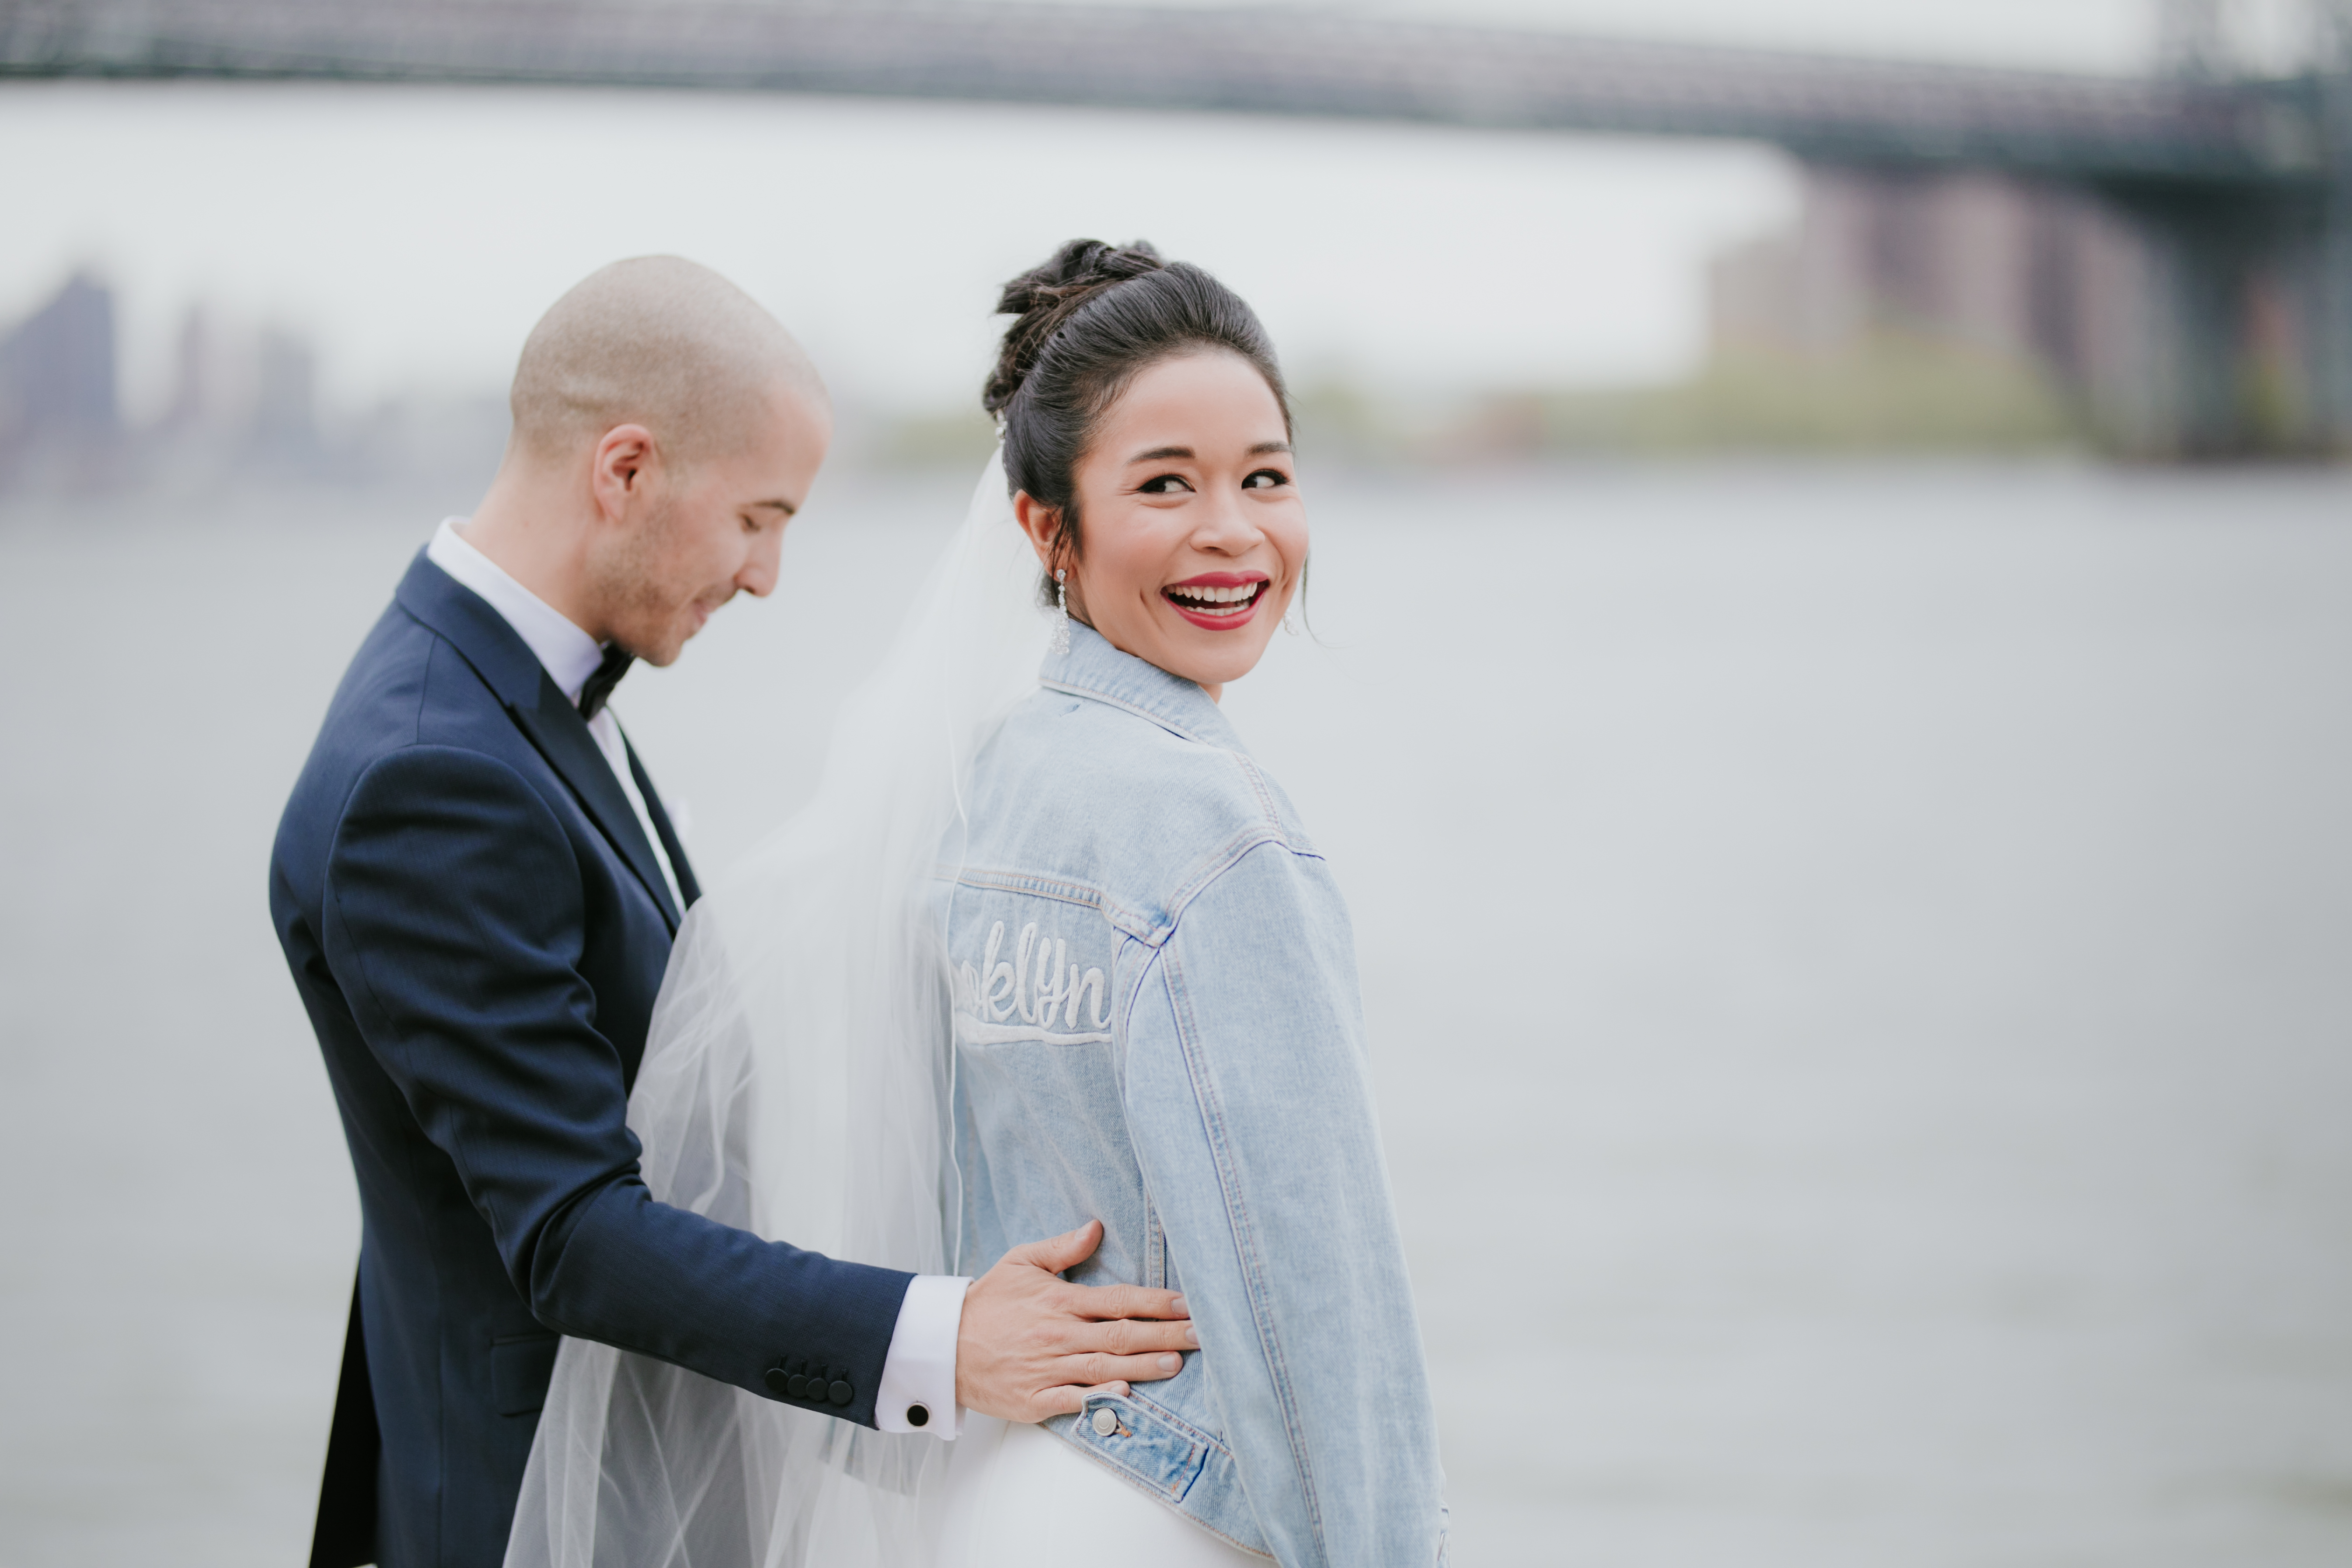 05 06 18 Elodie and Bertrand Wedding 64 - Wedding Video Sweepstakes Winners Wed at The W Loft in Brooklyn